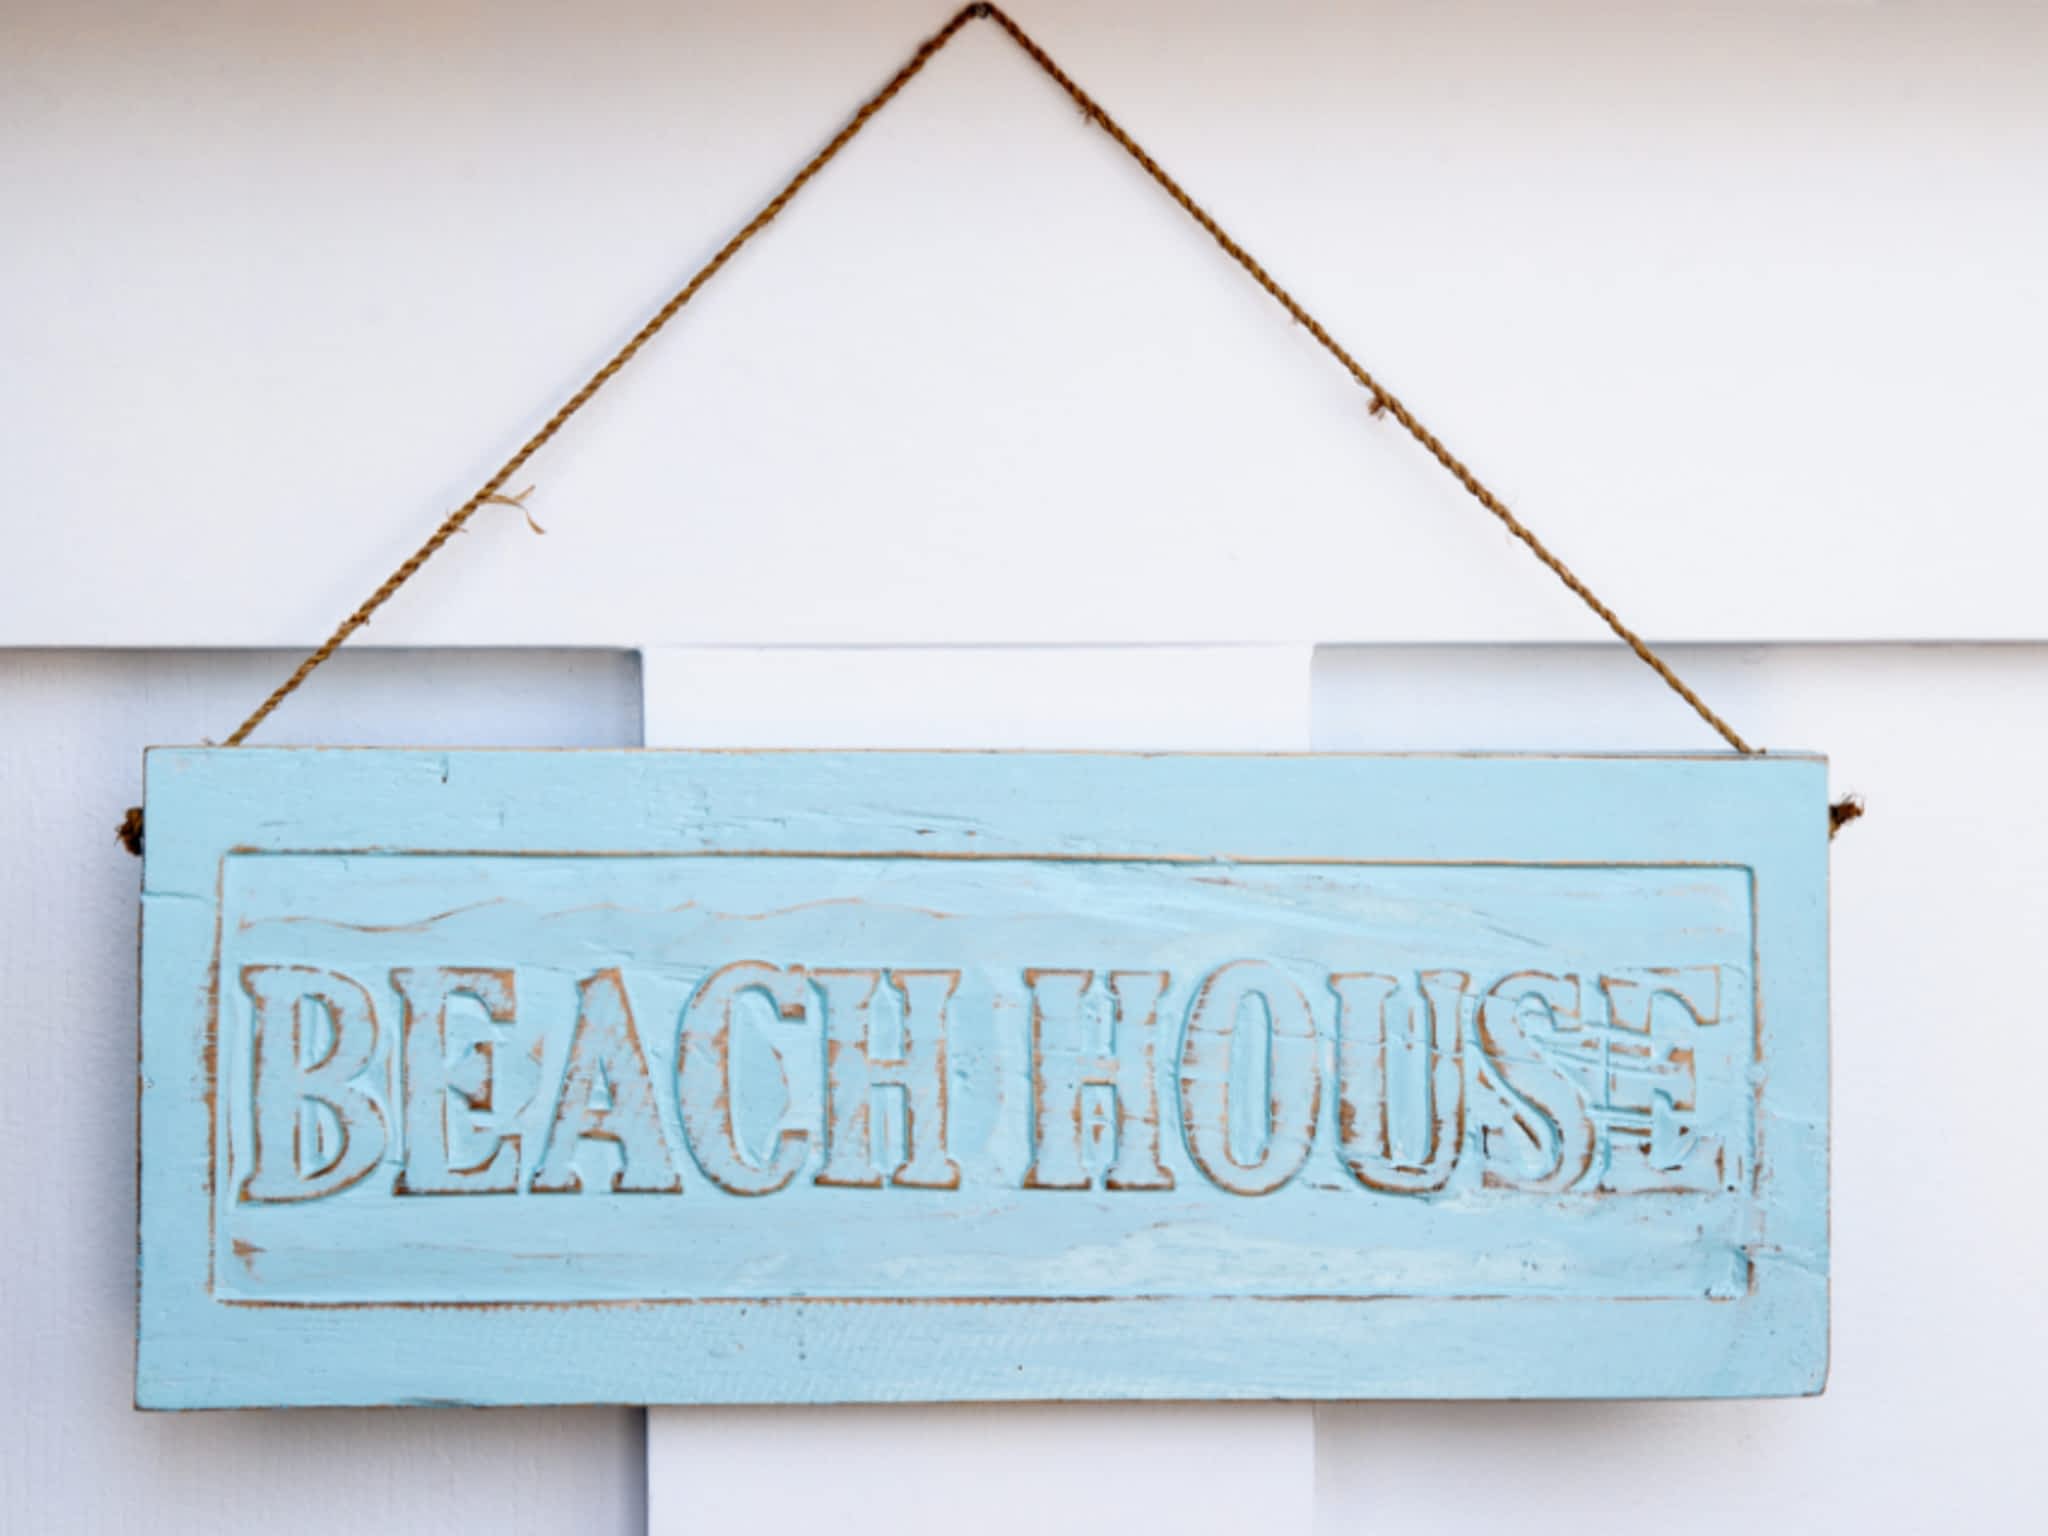 photo The Beach House Spa & Wellness